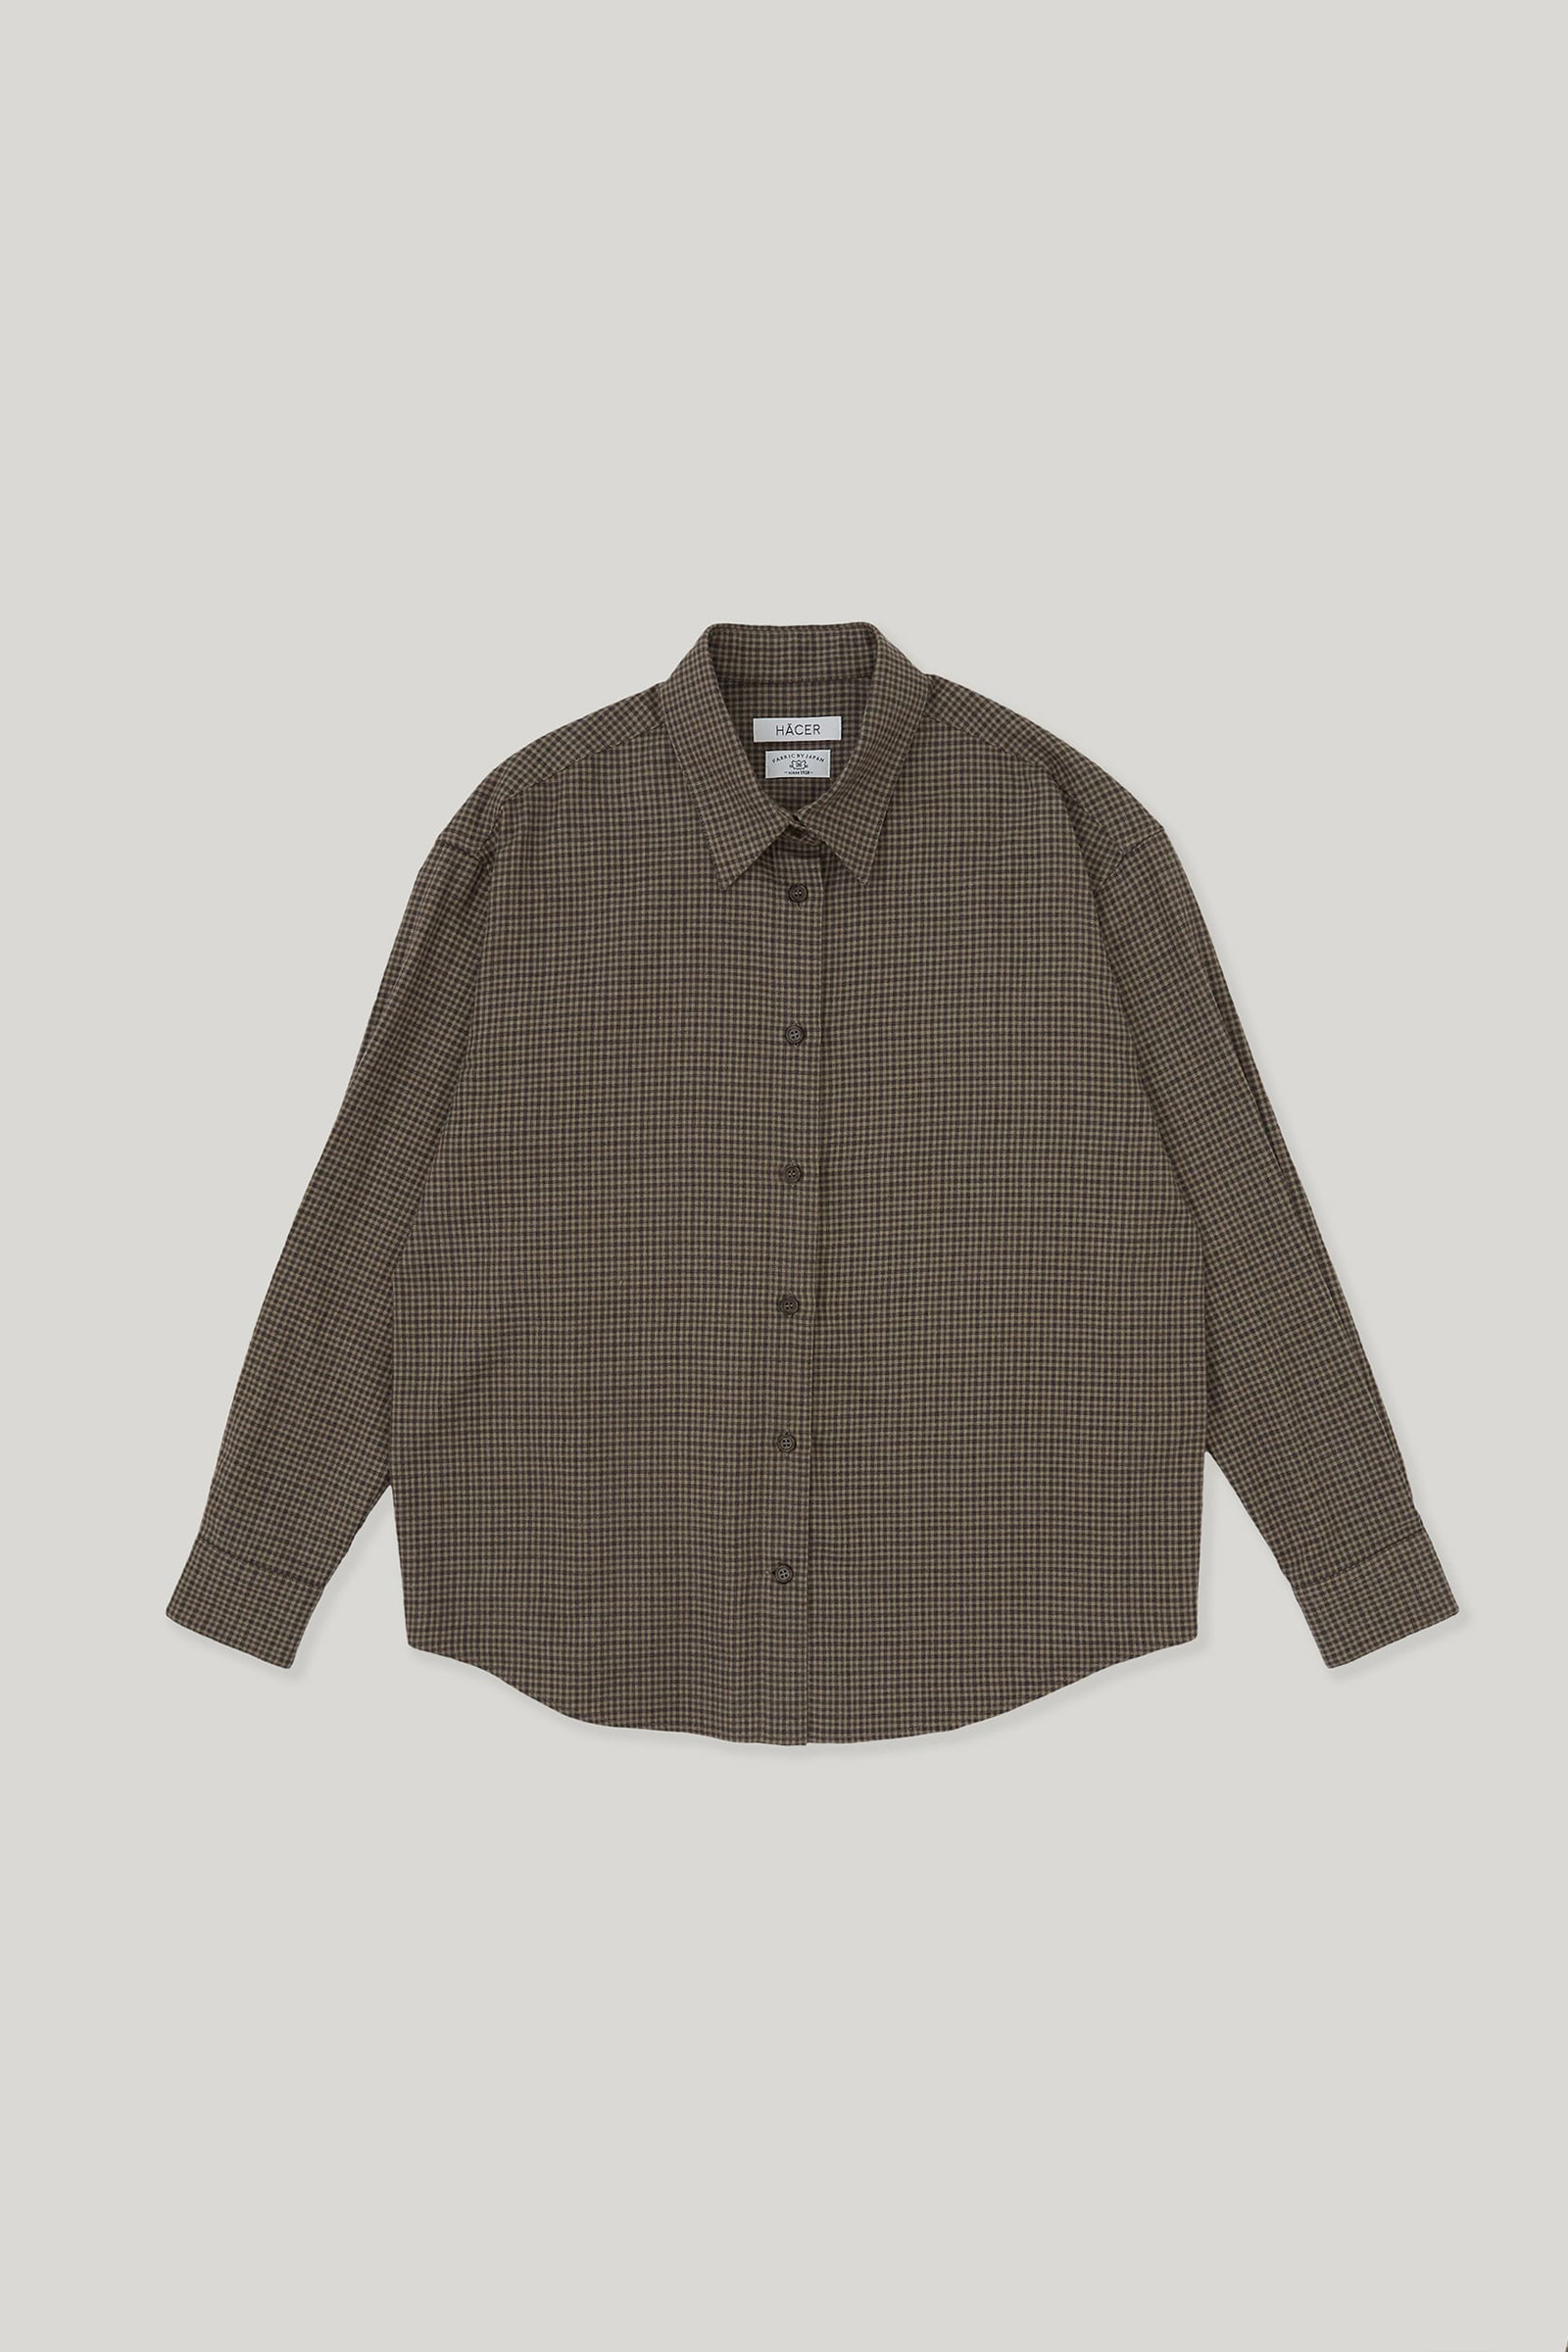 Brown Check Shirt (Fabric by Kuwamura)